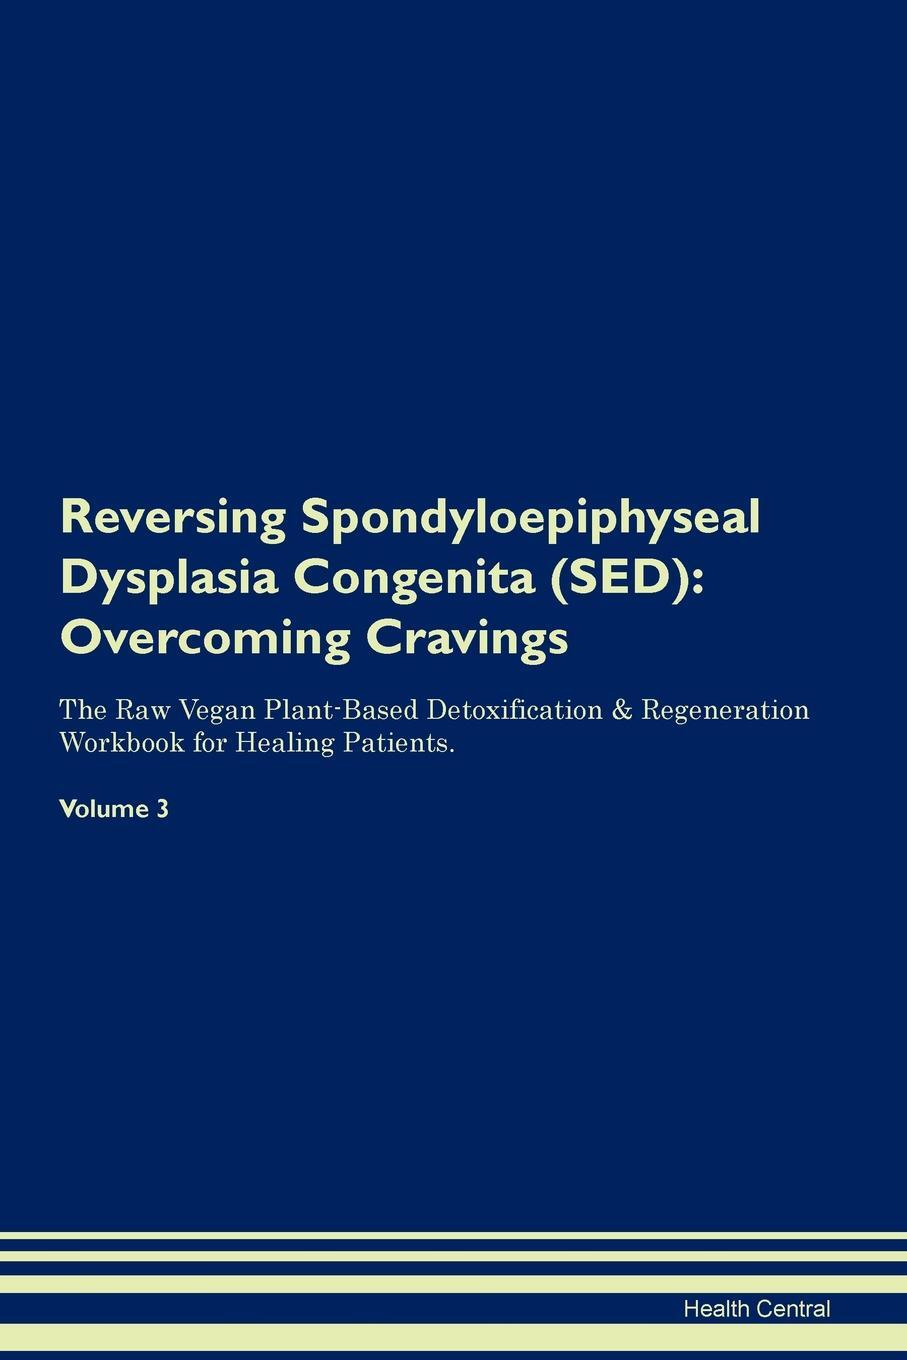 фото Reversing Spondyloepiphyseal Dysplasia Congenita (SED). Overcoming Cravings The Raw Vegan Plant-Based Detoxification & Regeneration Workbook for Healing Patients. Volume 3